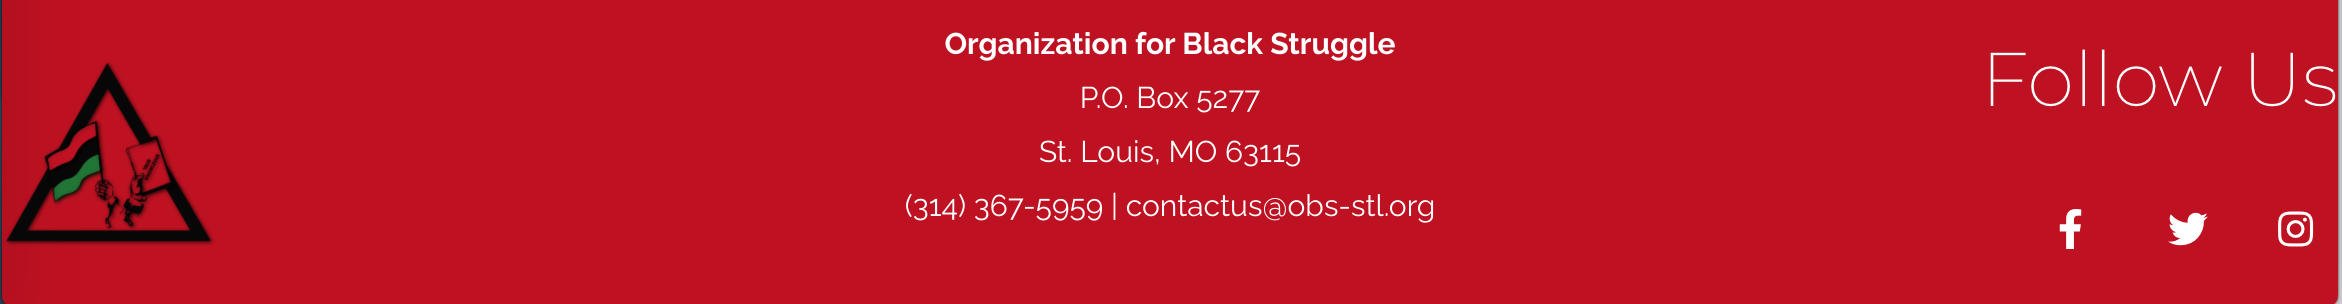 Organization for Black Struggle